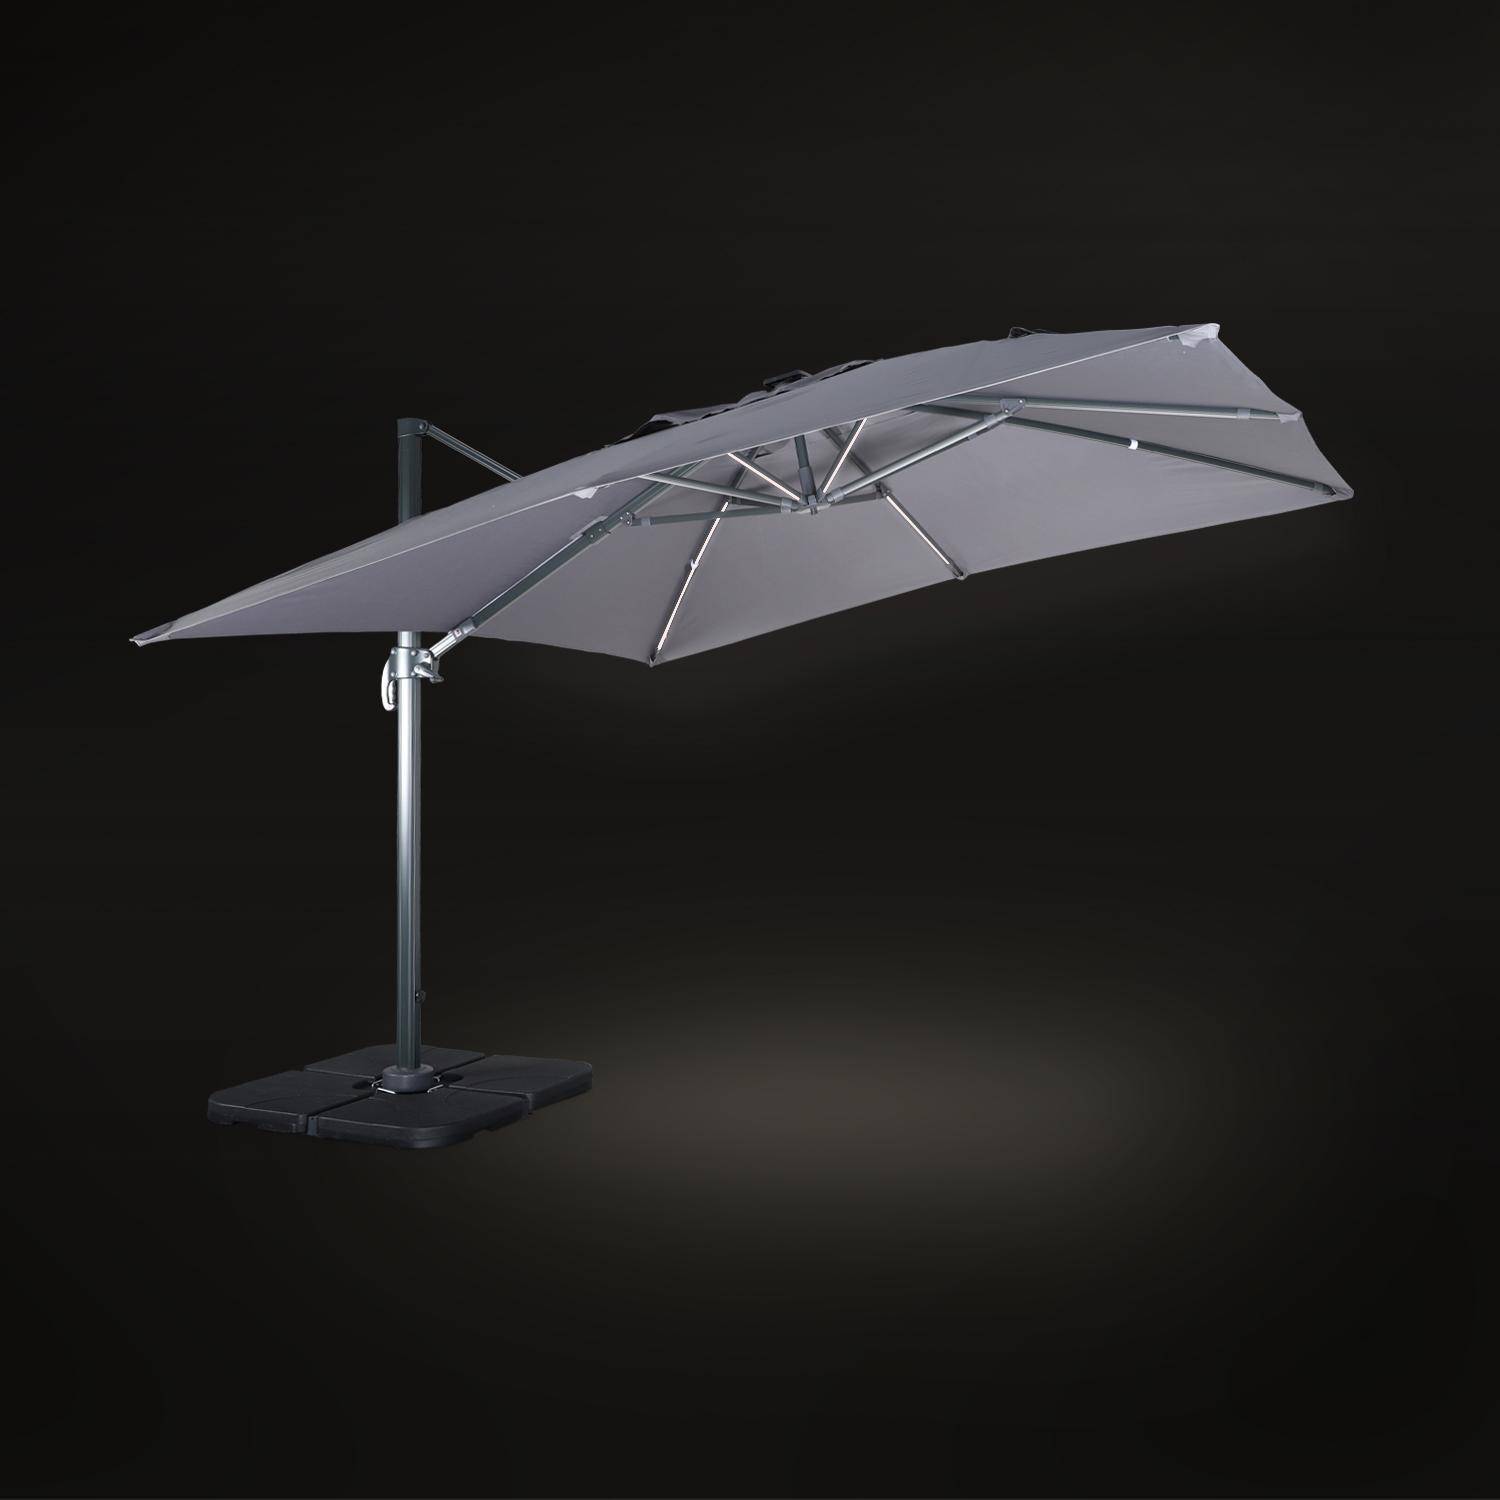 3x3m, Luce, grijze LED parasol op zonne-energie met geïntegreerd licht + hoes,sweeek,Photo4